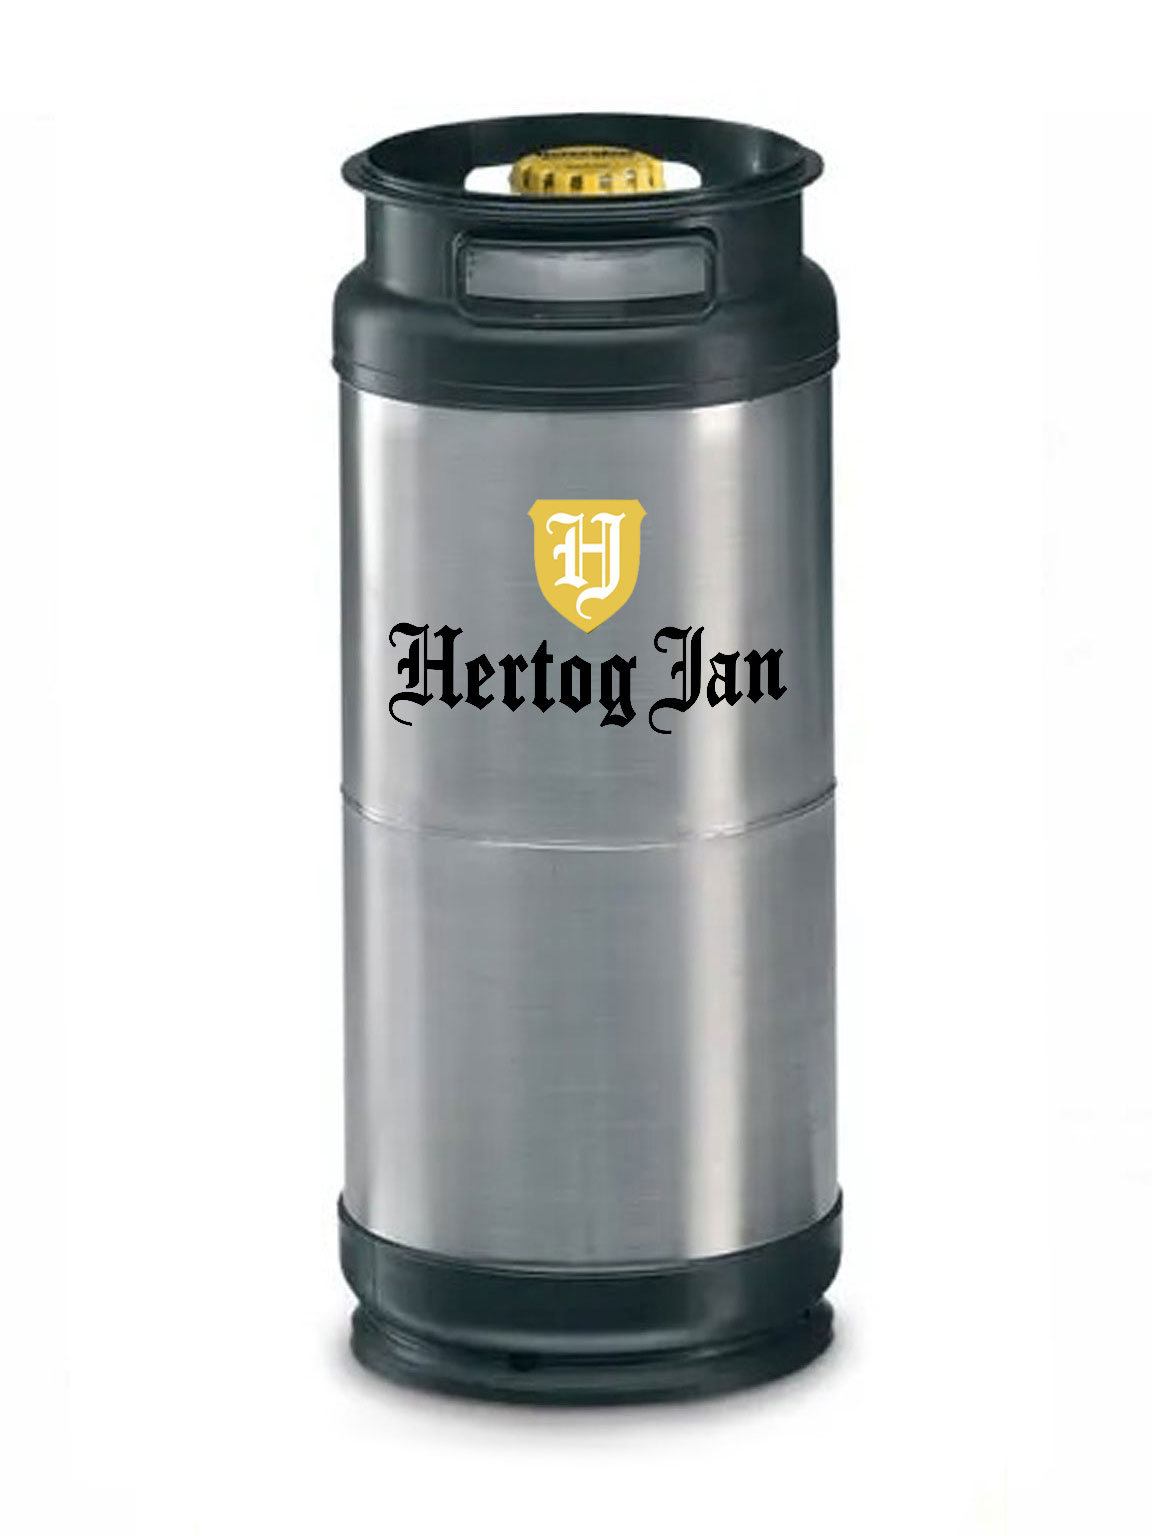 Hertog-Jan-groot-20L-1152×1536